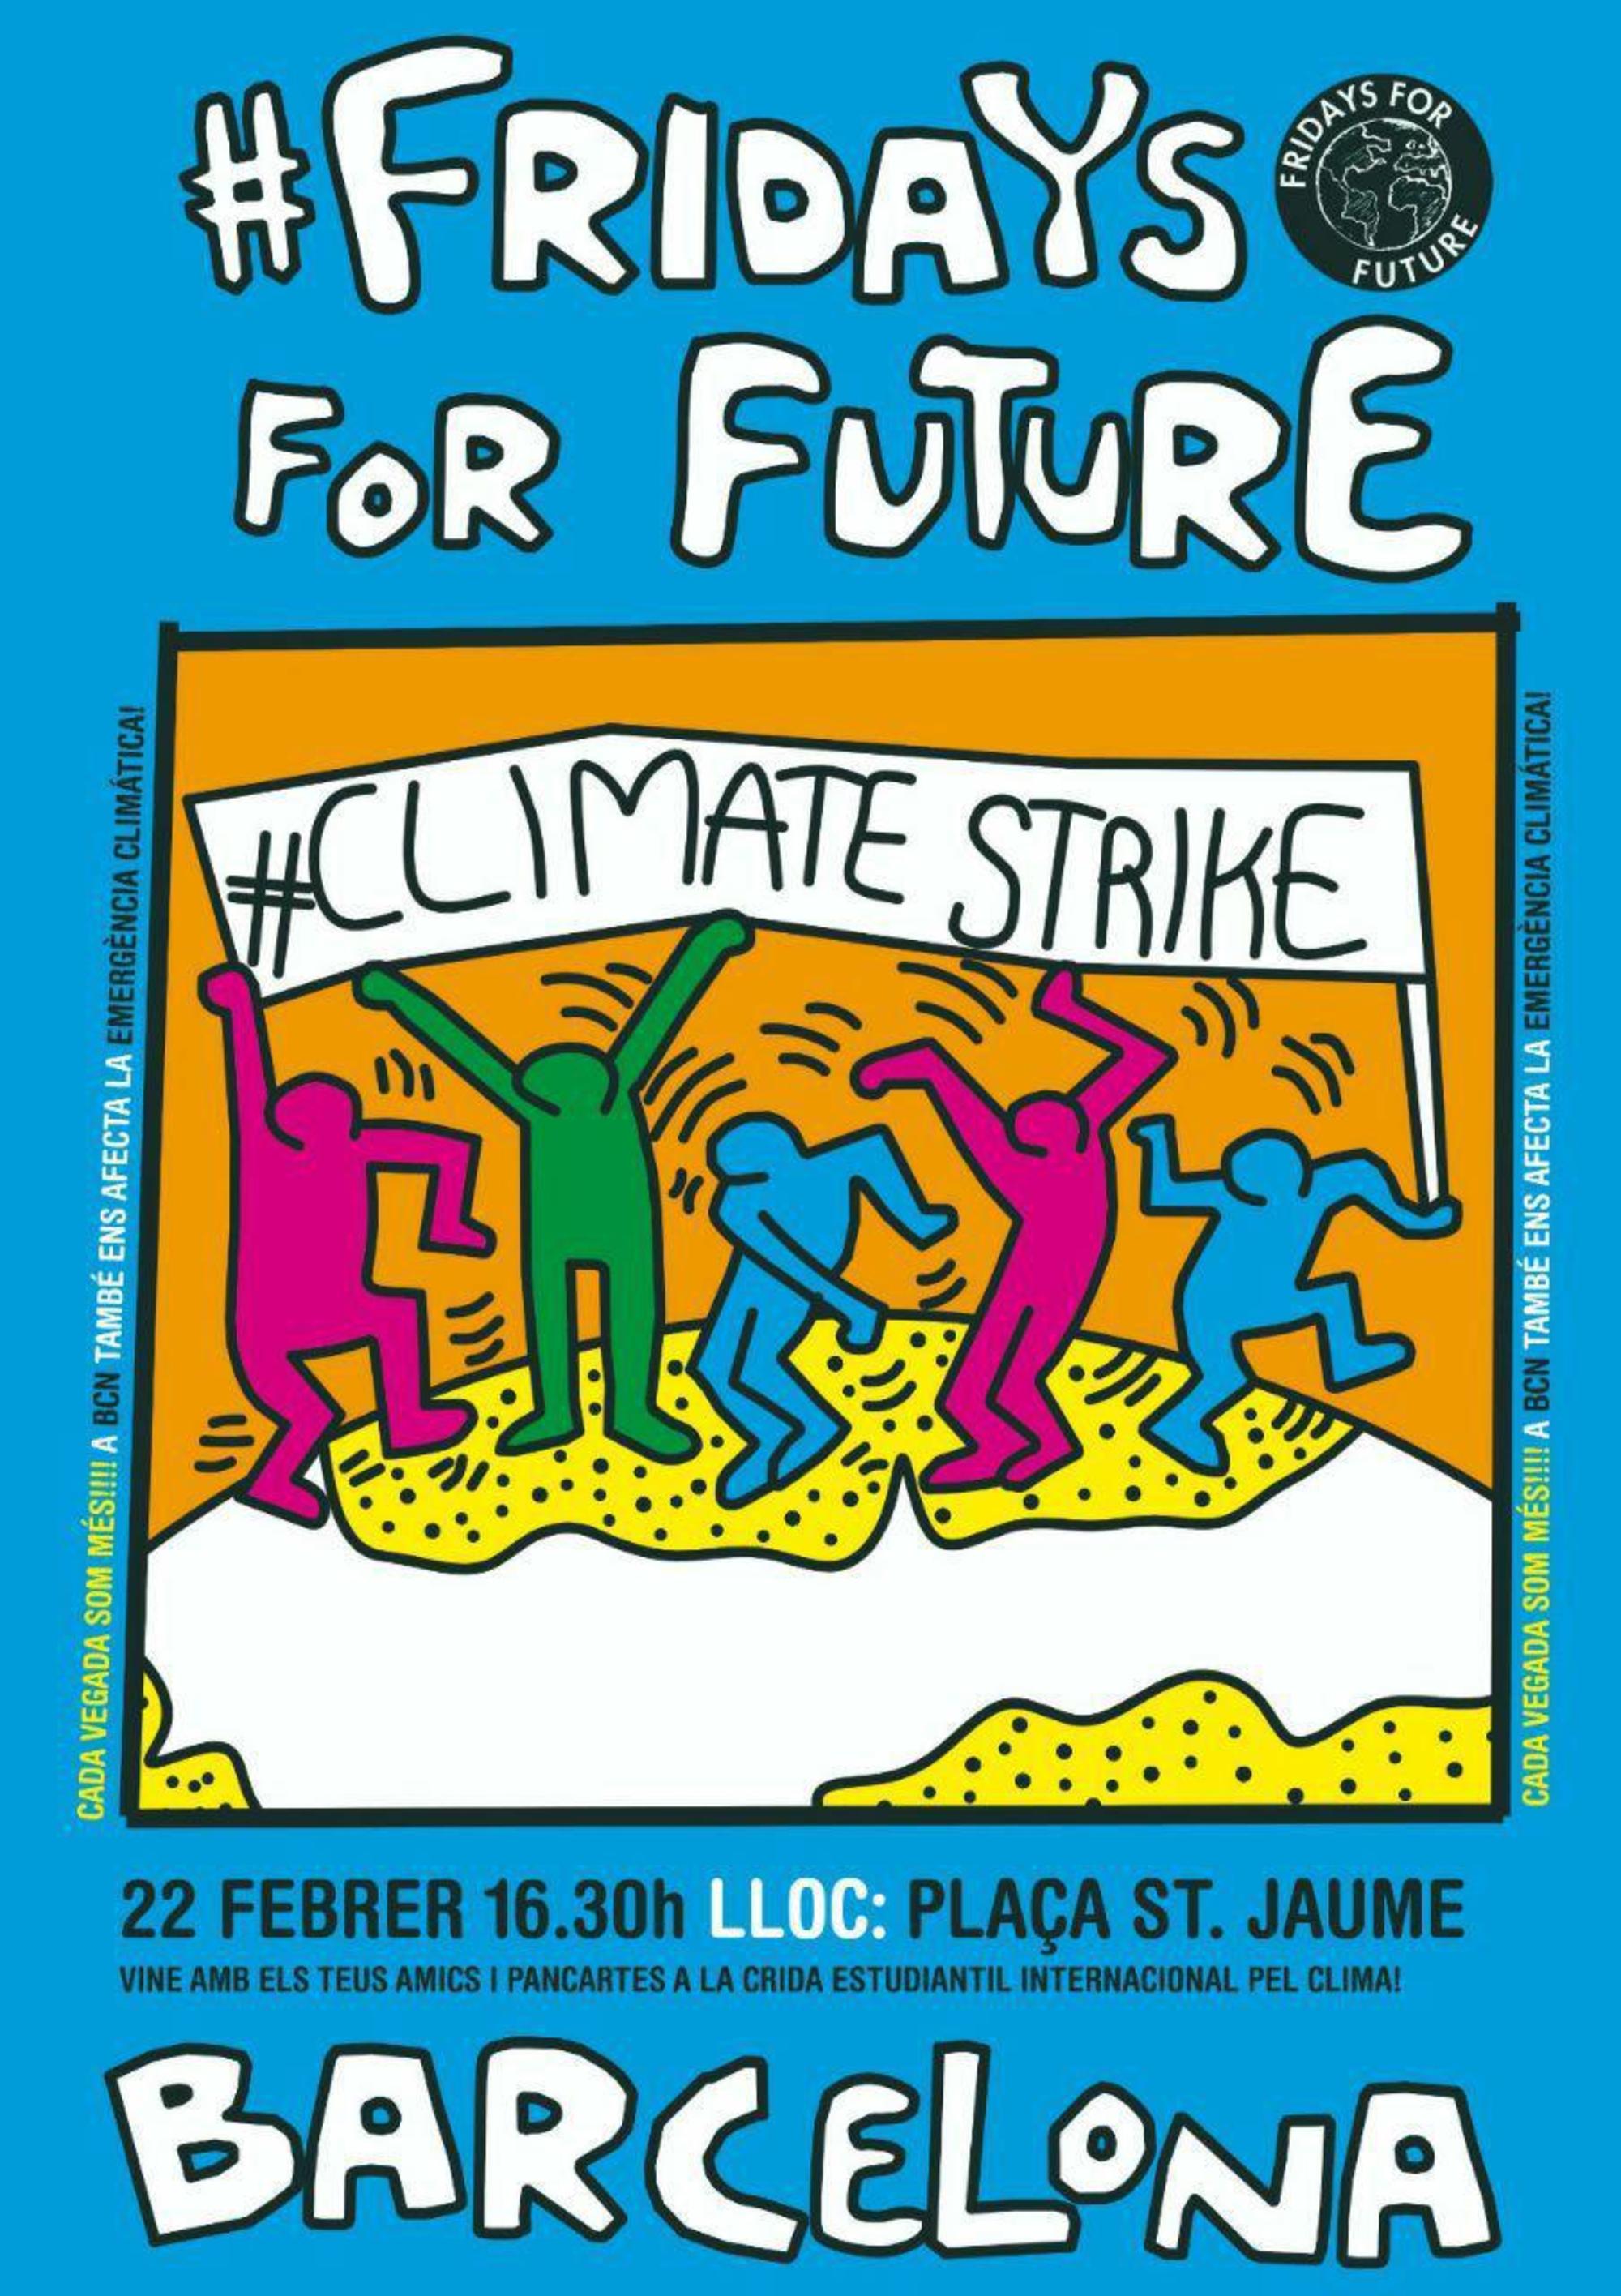 Primera manifestación Fridays for Future en Barcelona